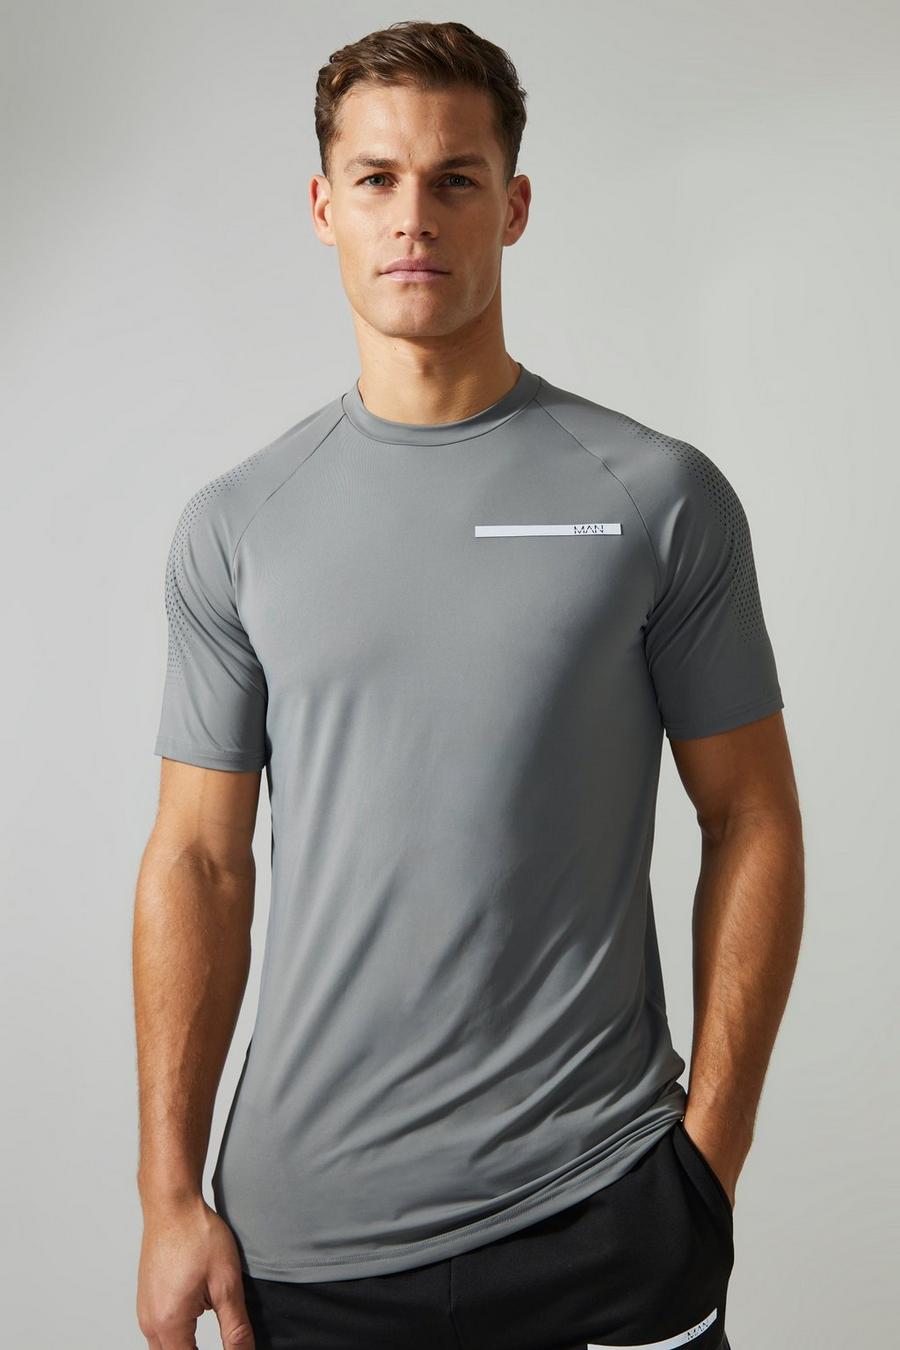 Charcoal grey Tall Man Active Performance Raglan T Shirt